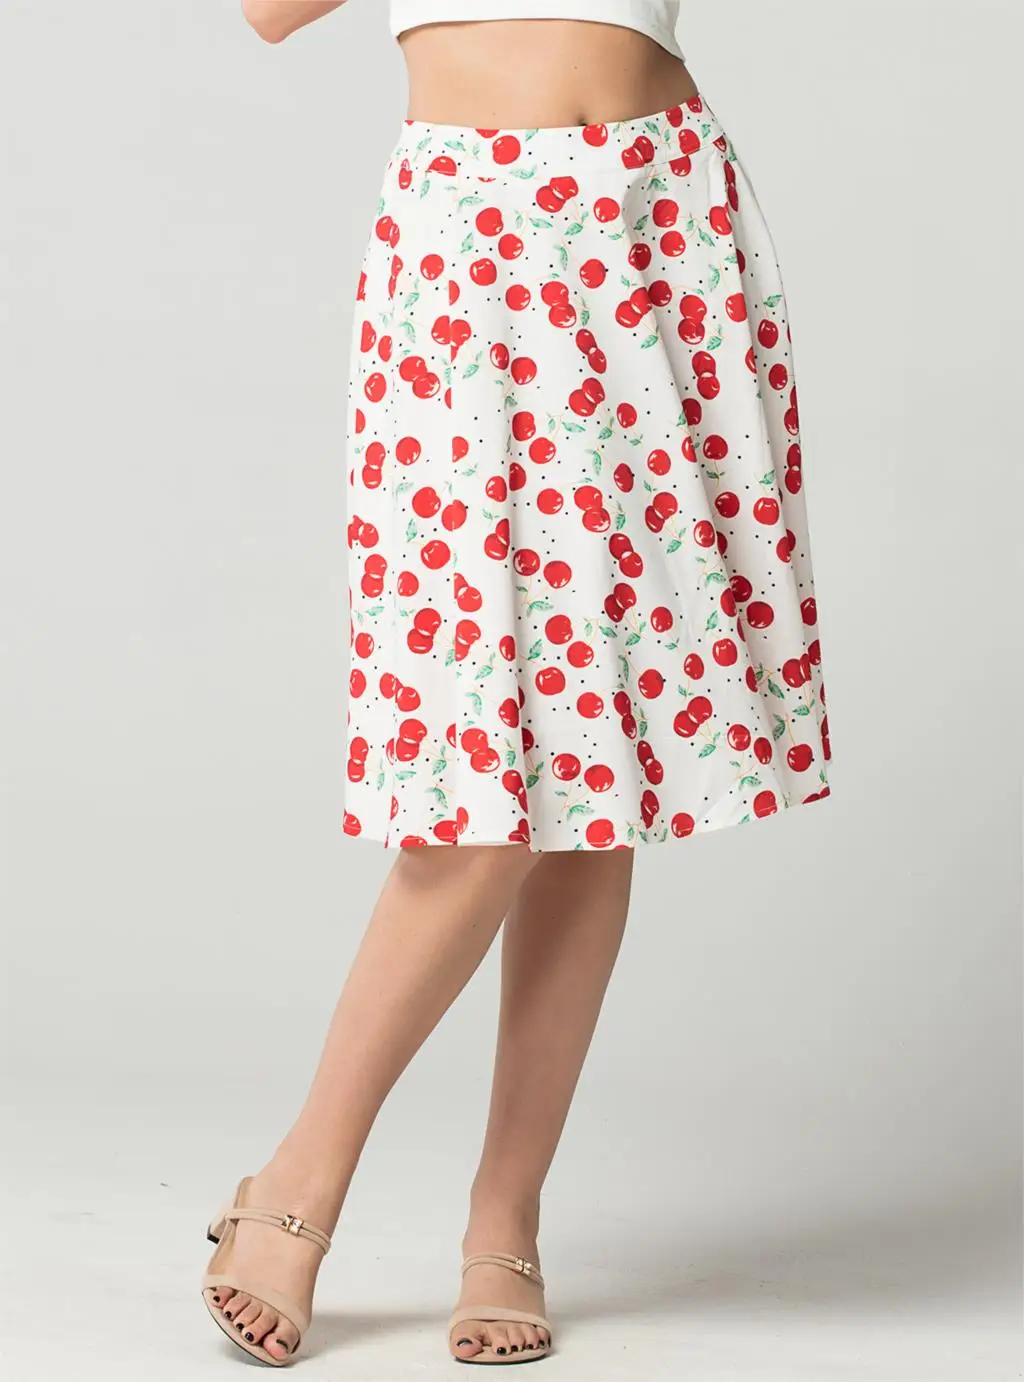 Summer Women Casual High Quality Sweet Skirt Fashion Cherry Print Streetwear Knee-Length Vintage Pleated Skirt FICUSRONG